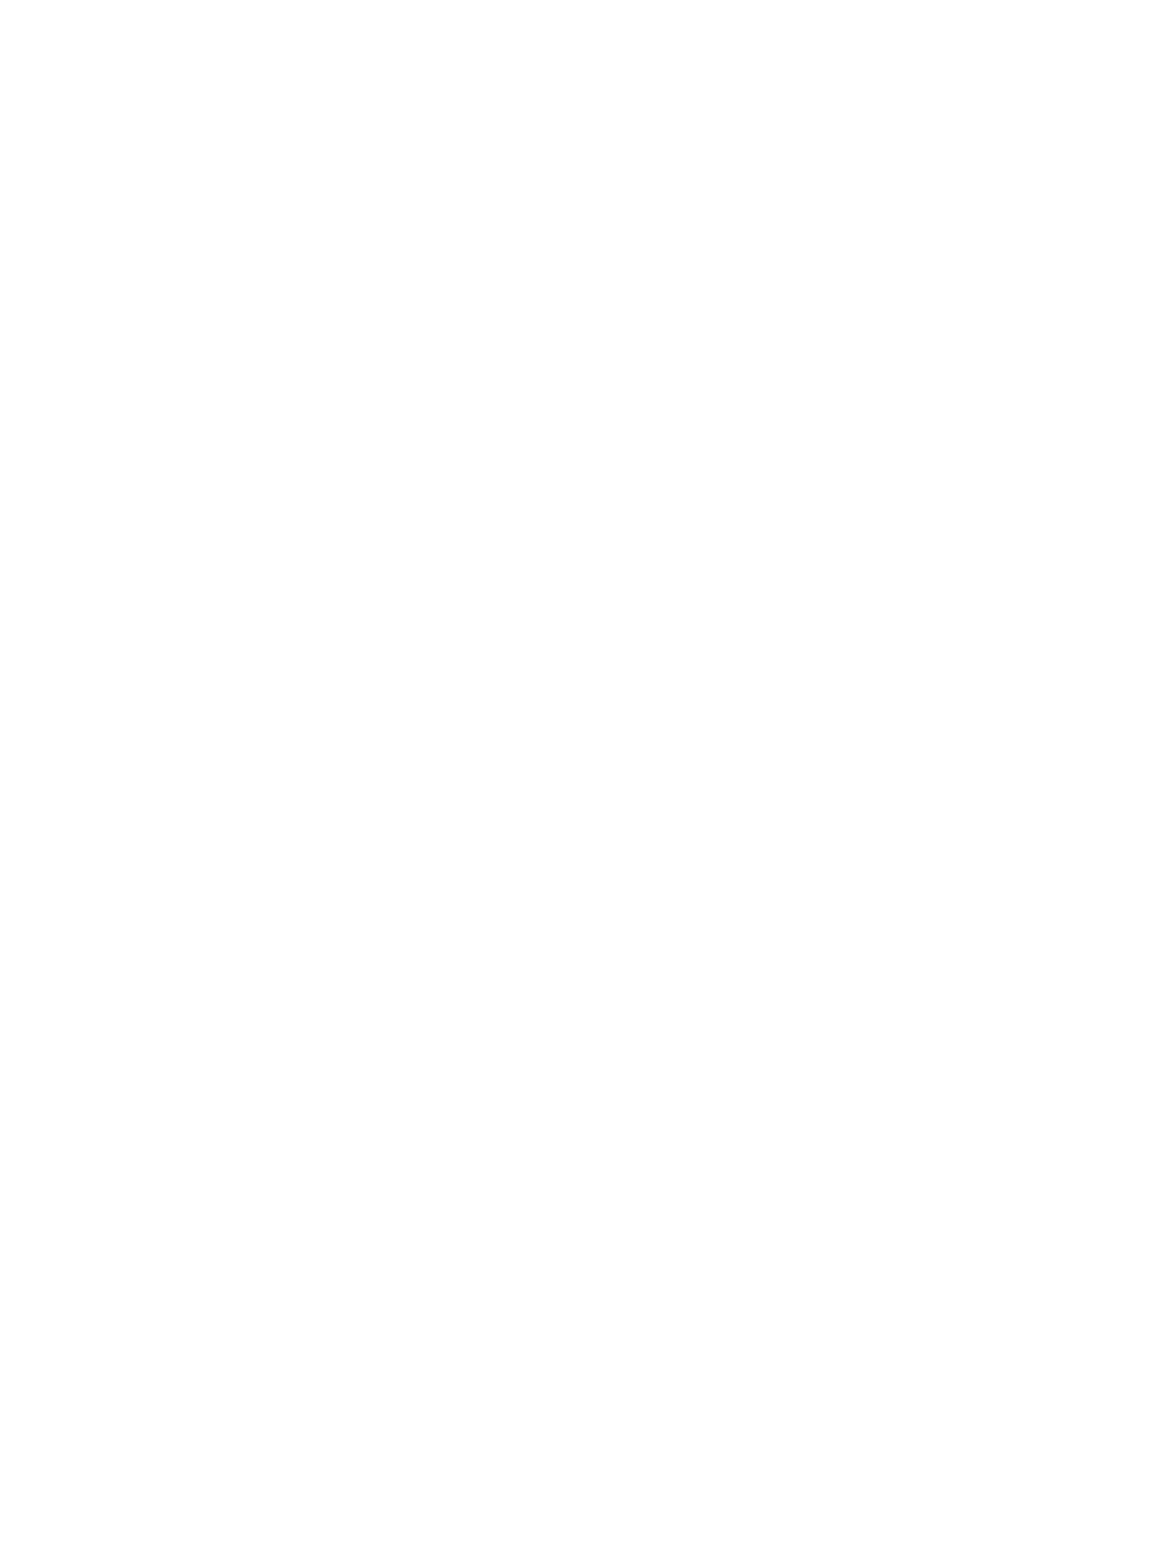 KLCC Property Holdings logo pour fonds sombres (PNG transparent)